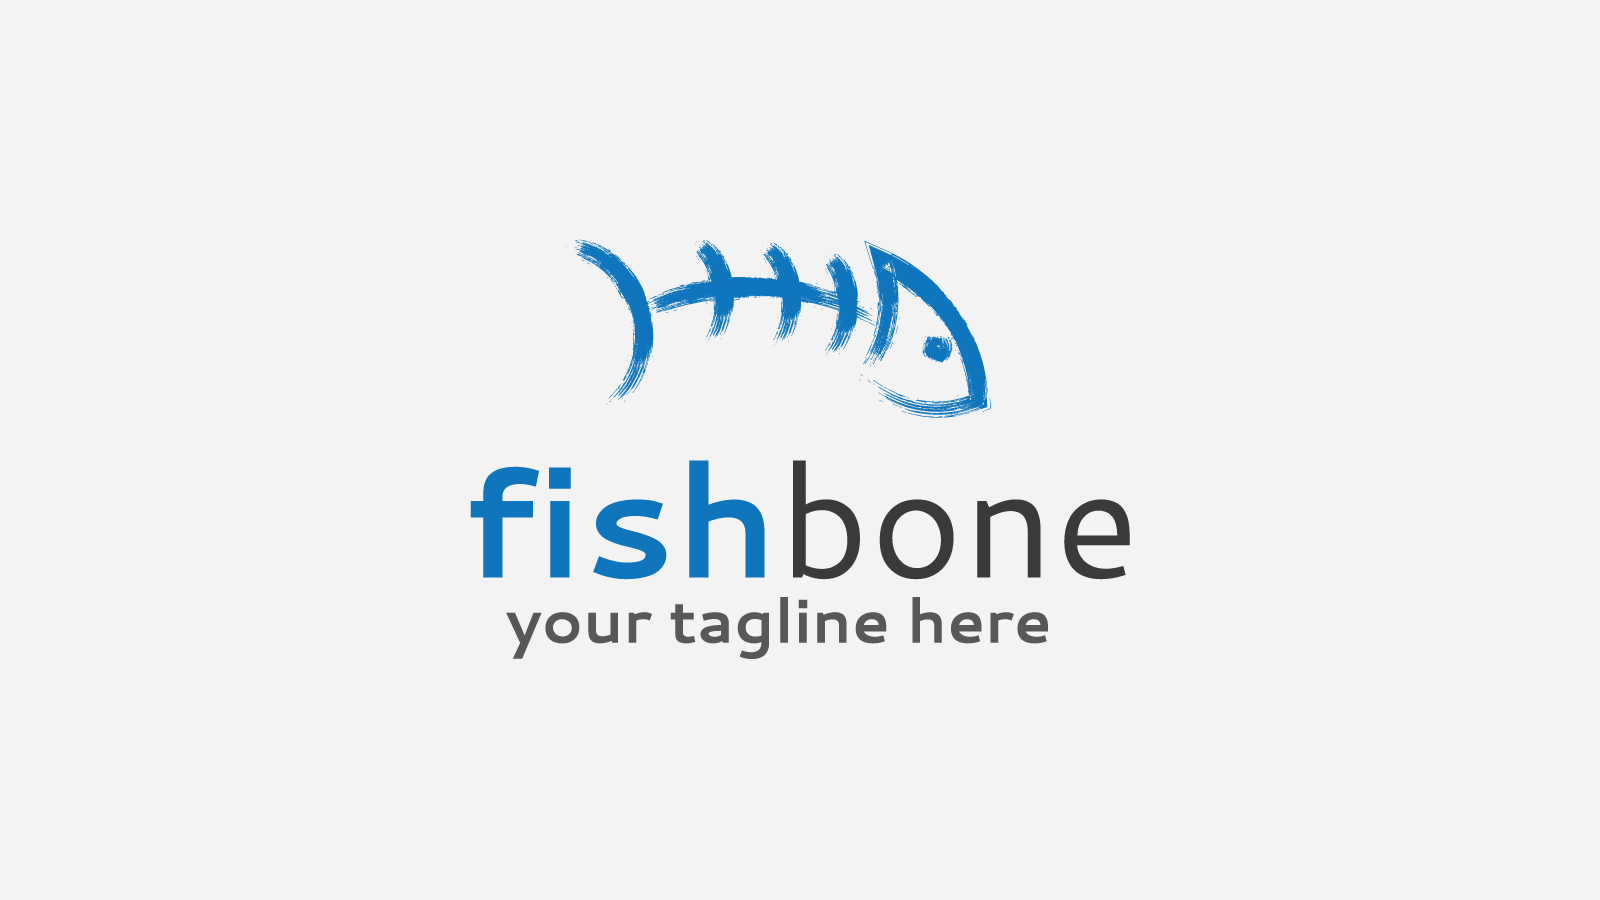 Fishbone Logo - fishbone free logo design | Zfreegraphic: Free vector logo downloads